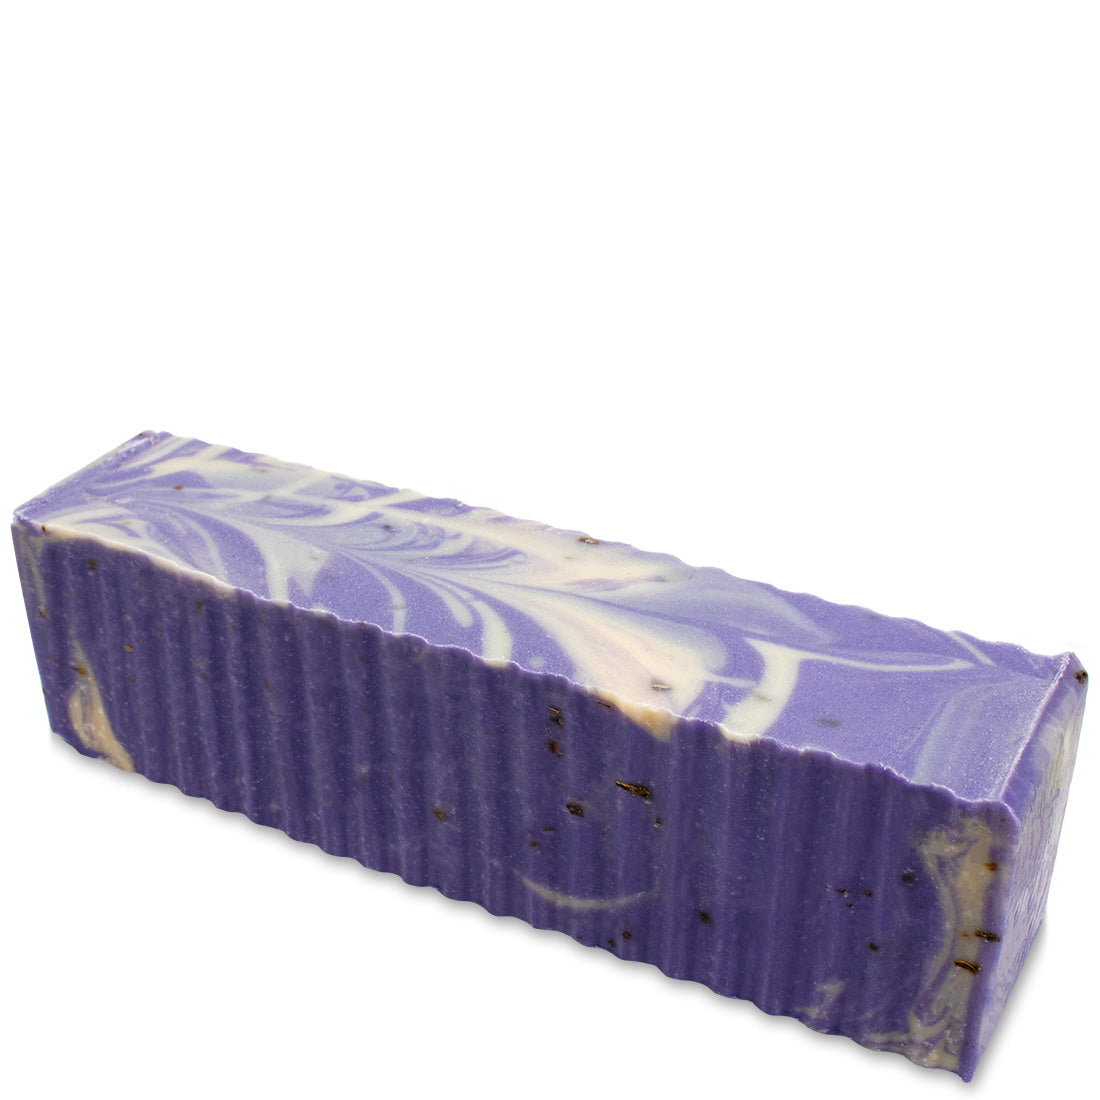 Purple 3lb brick of bar soap with white swirls and lavender specks.